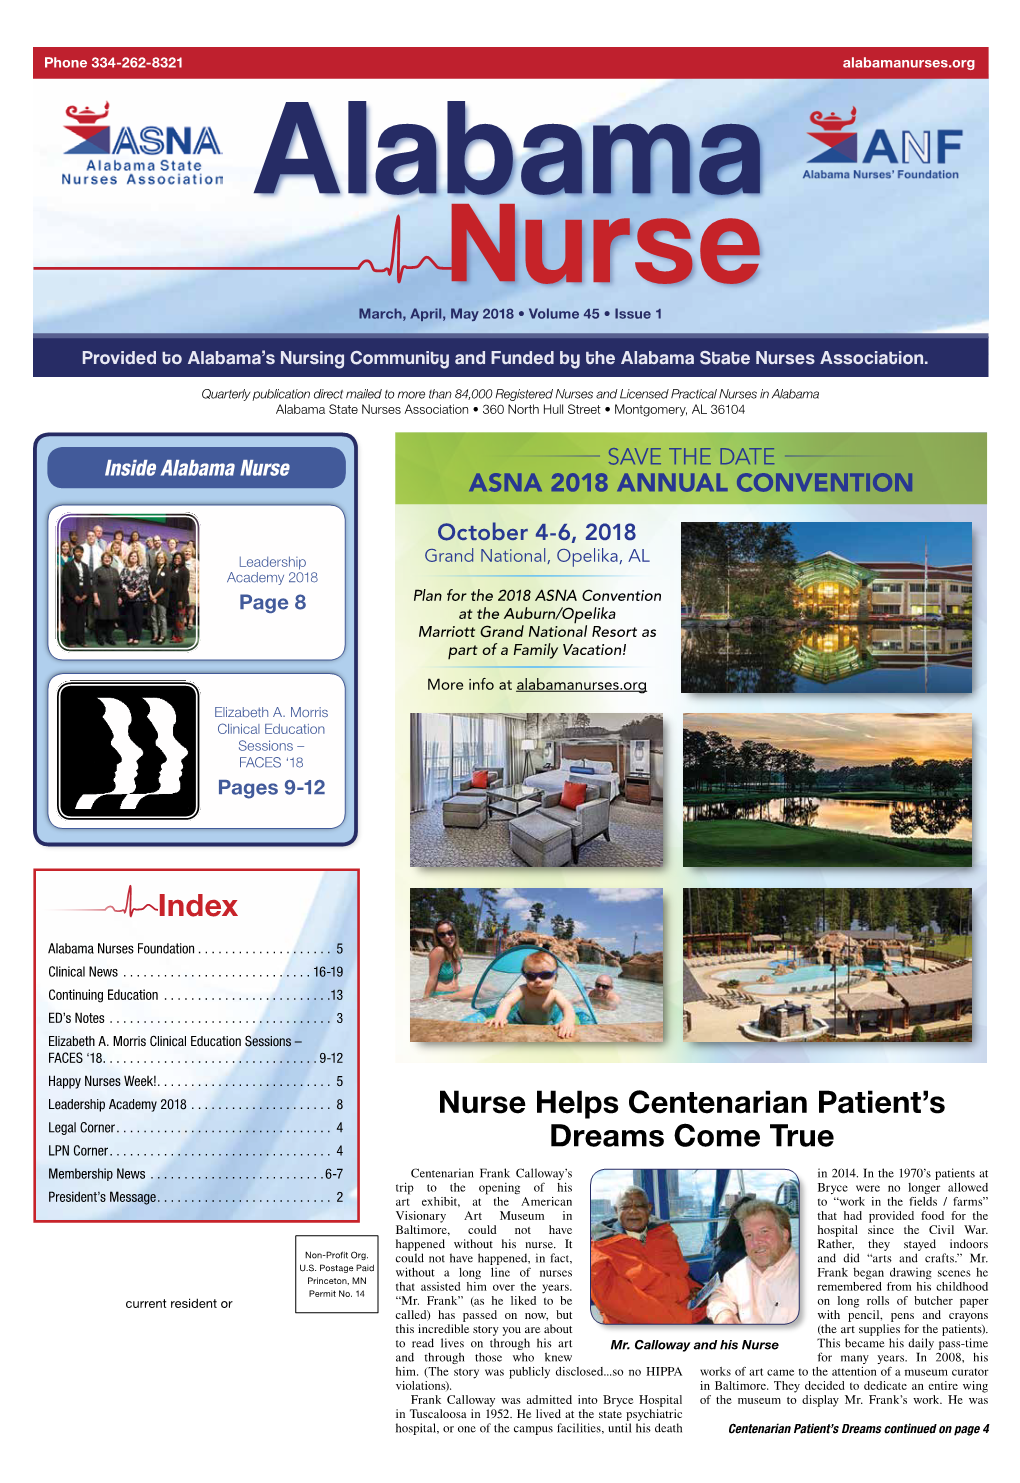 Inside Alabama Nurse SAVE the DATE ASNA 2018 ANNUAL CONVENTION